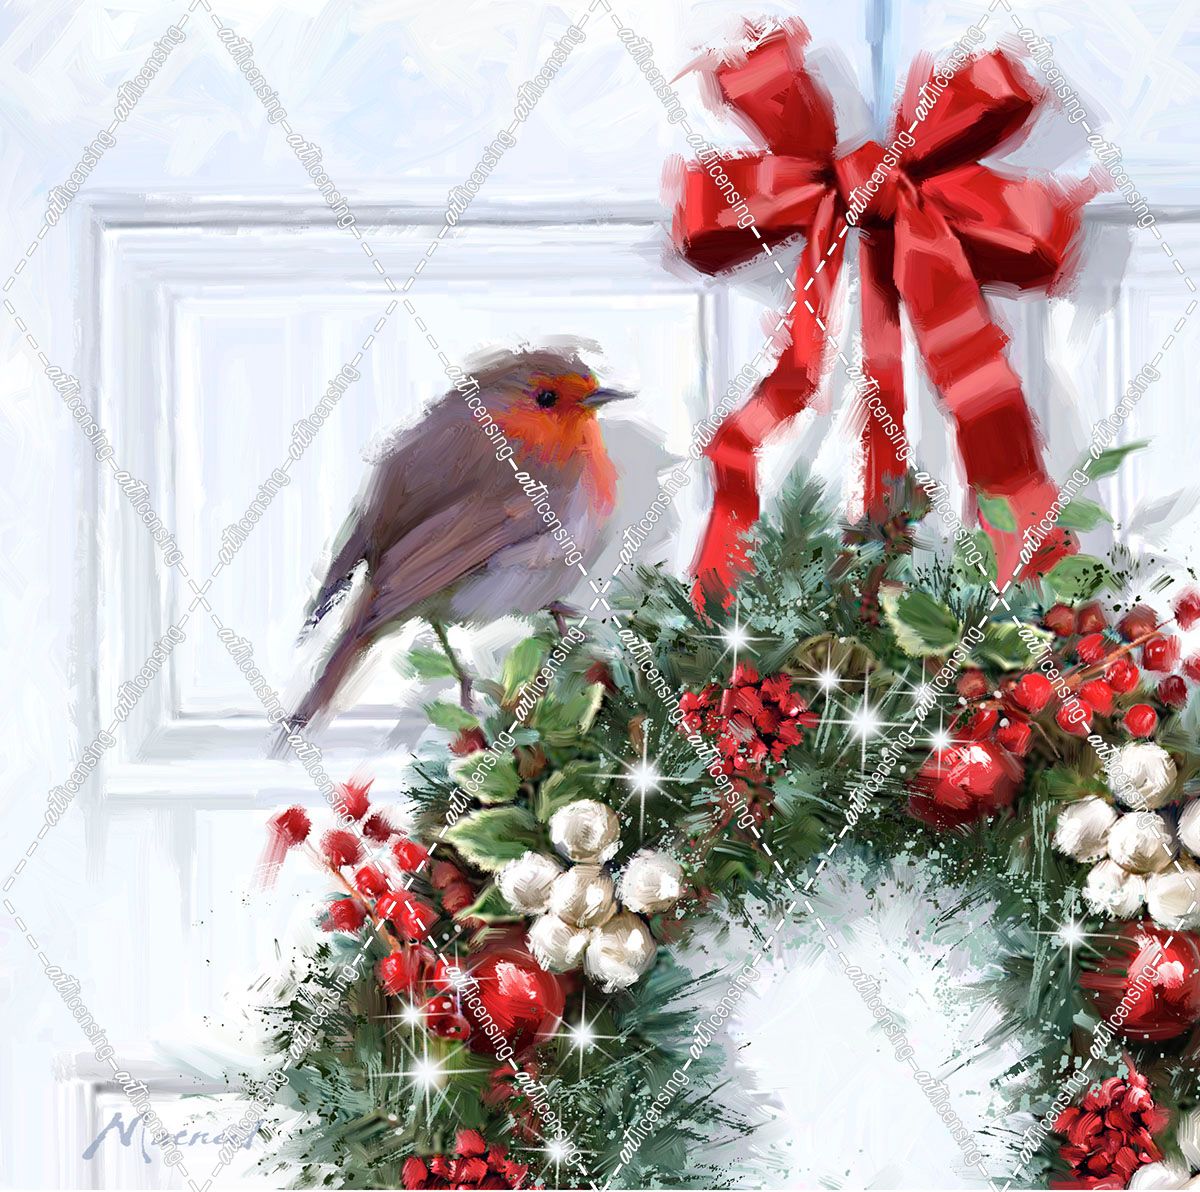 0432 Robin On Wreath